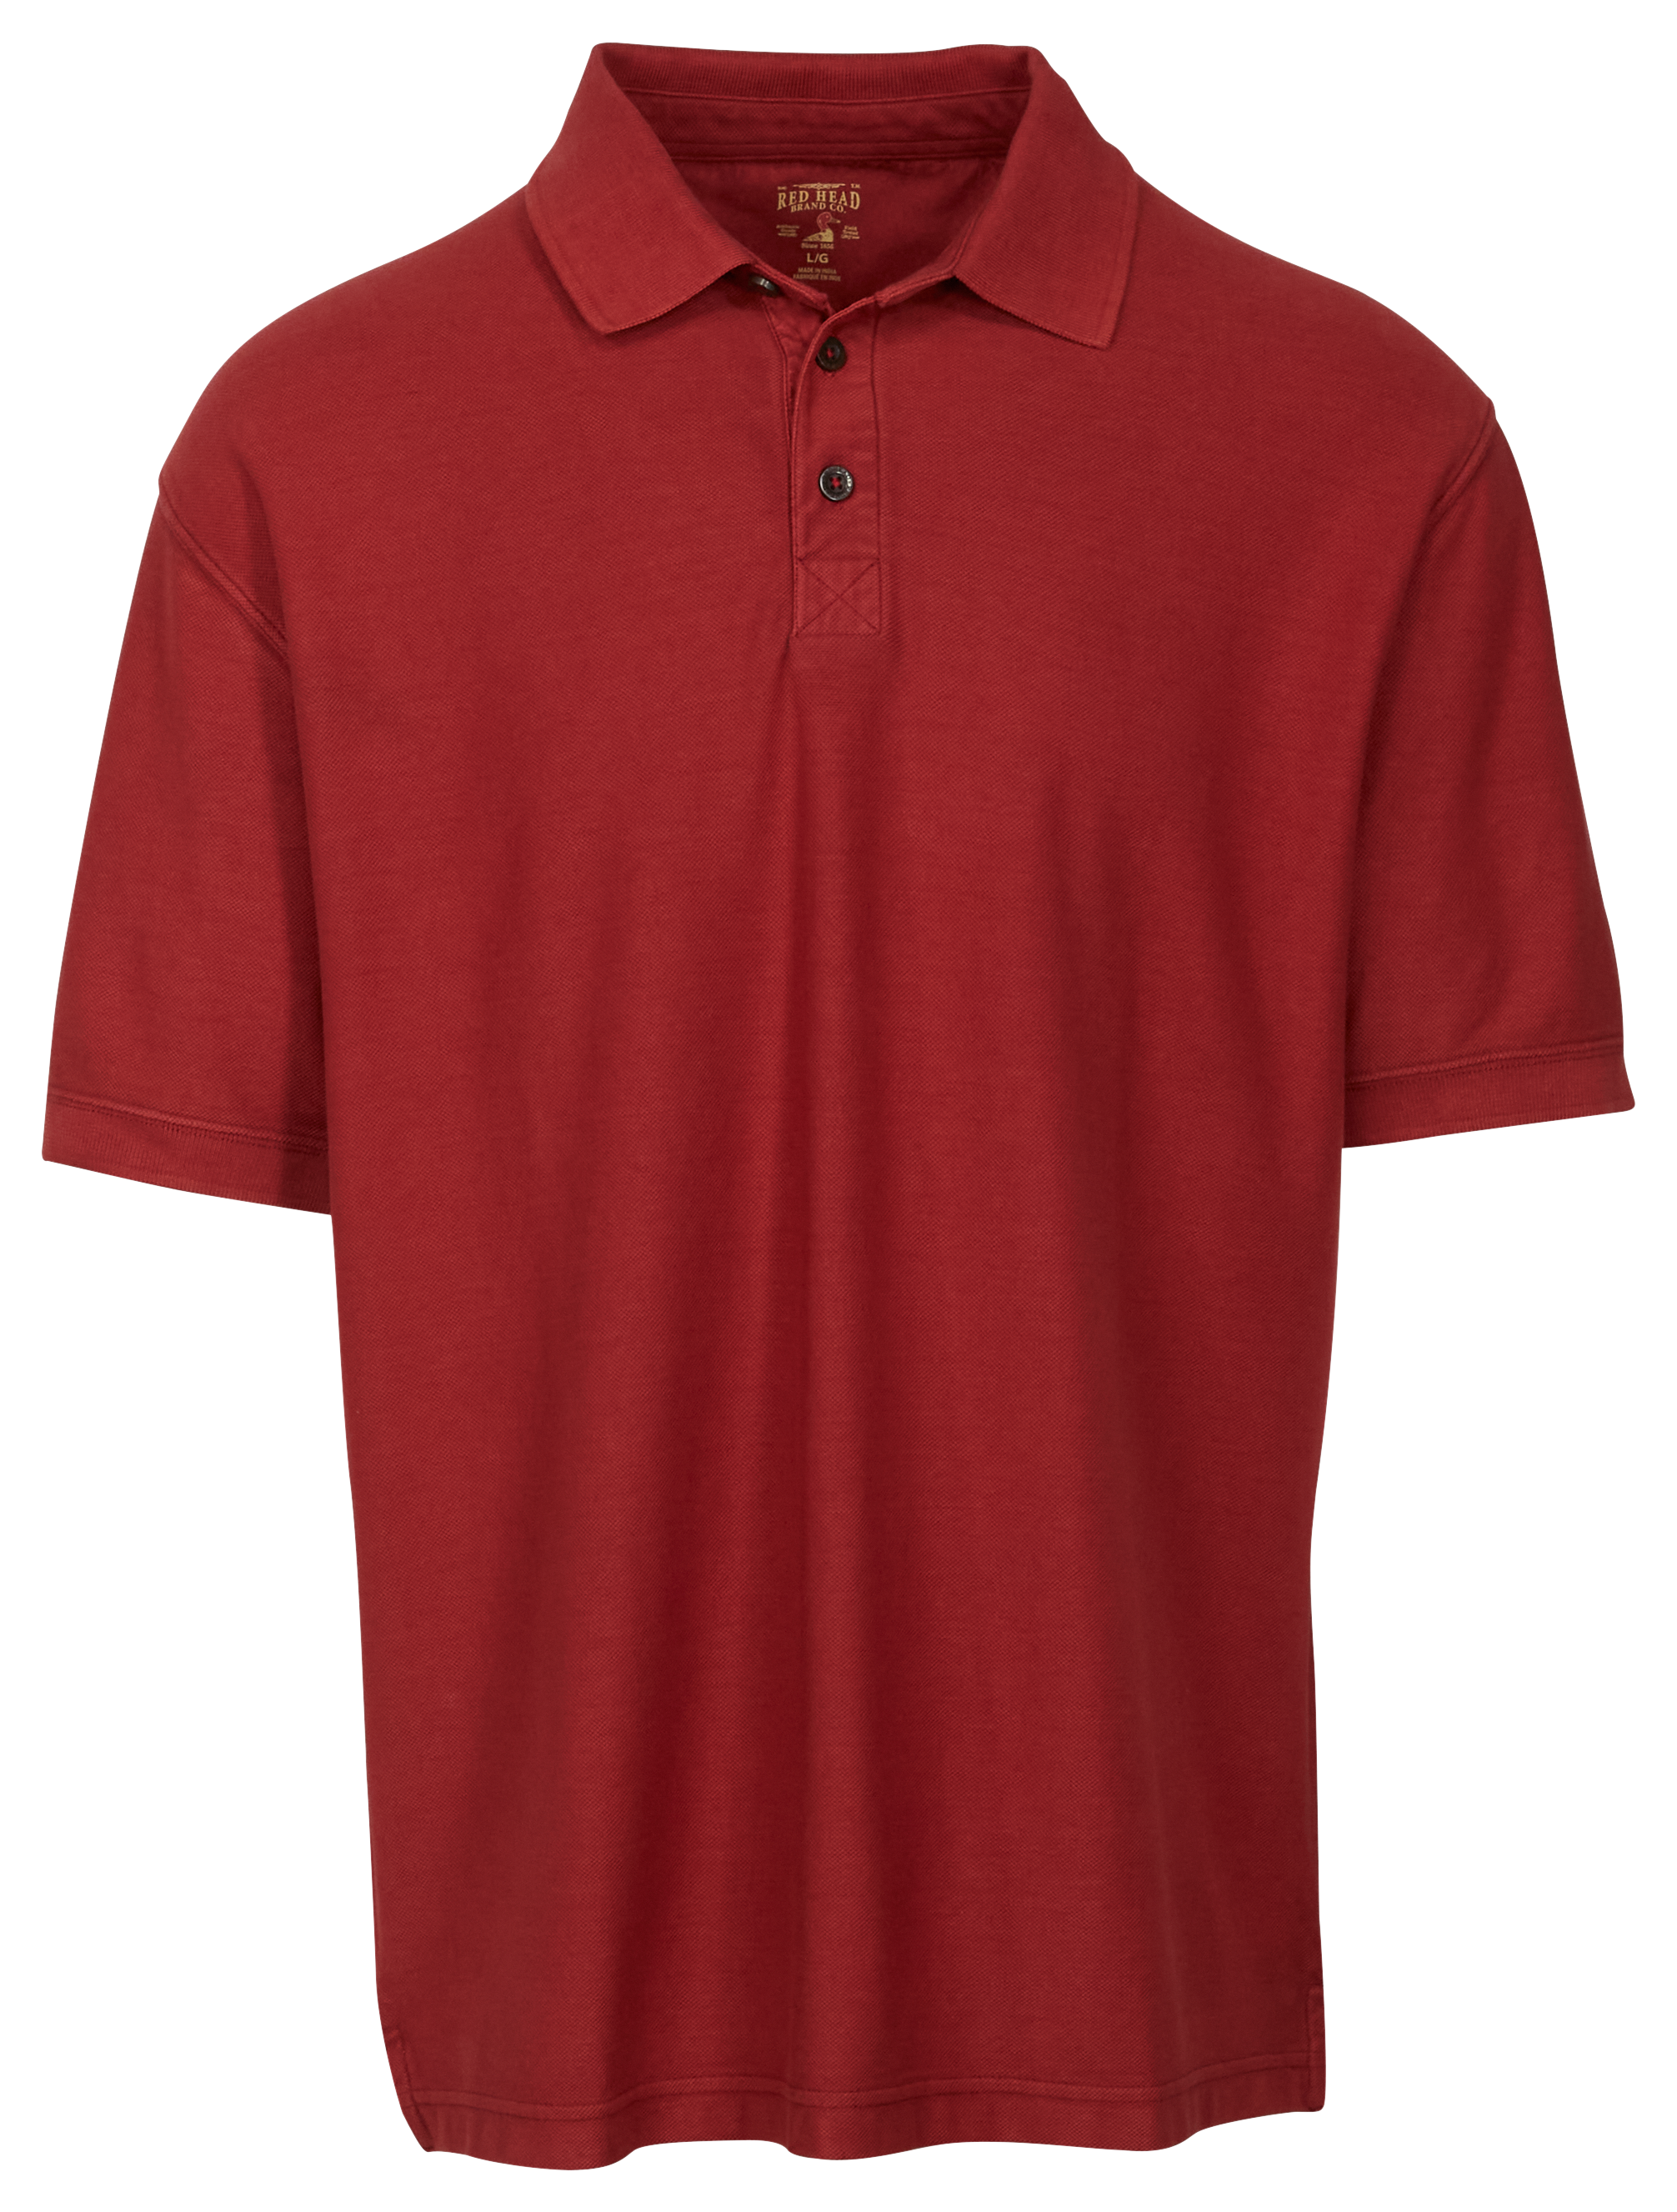 100% cotton polo shirt with pocket - Men